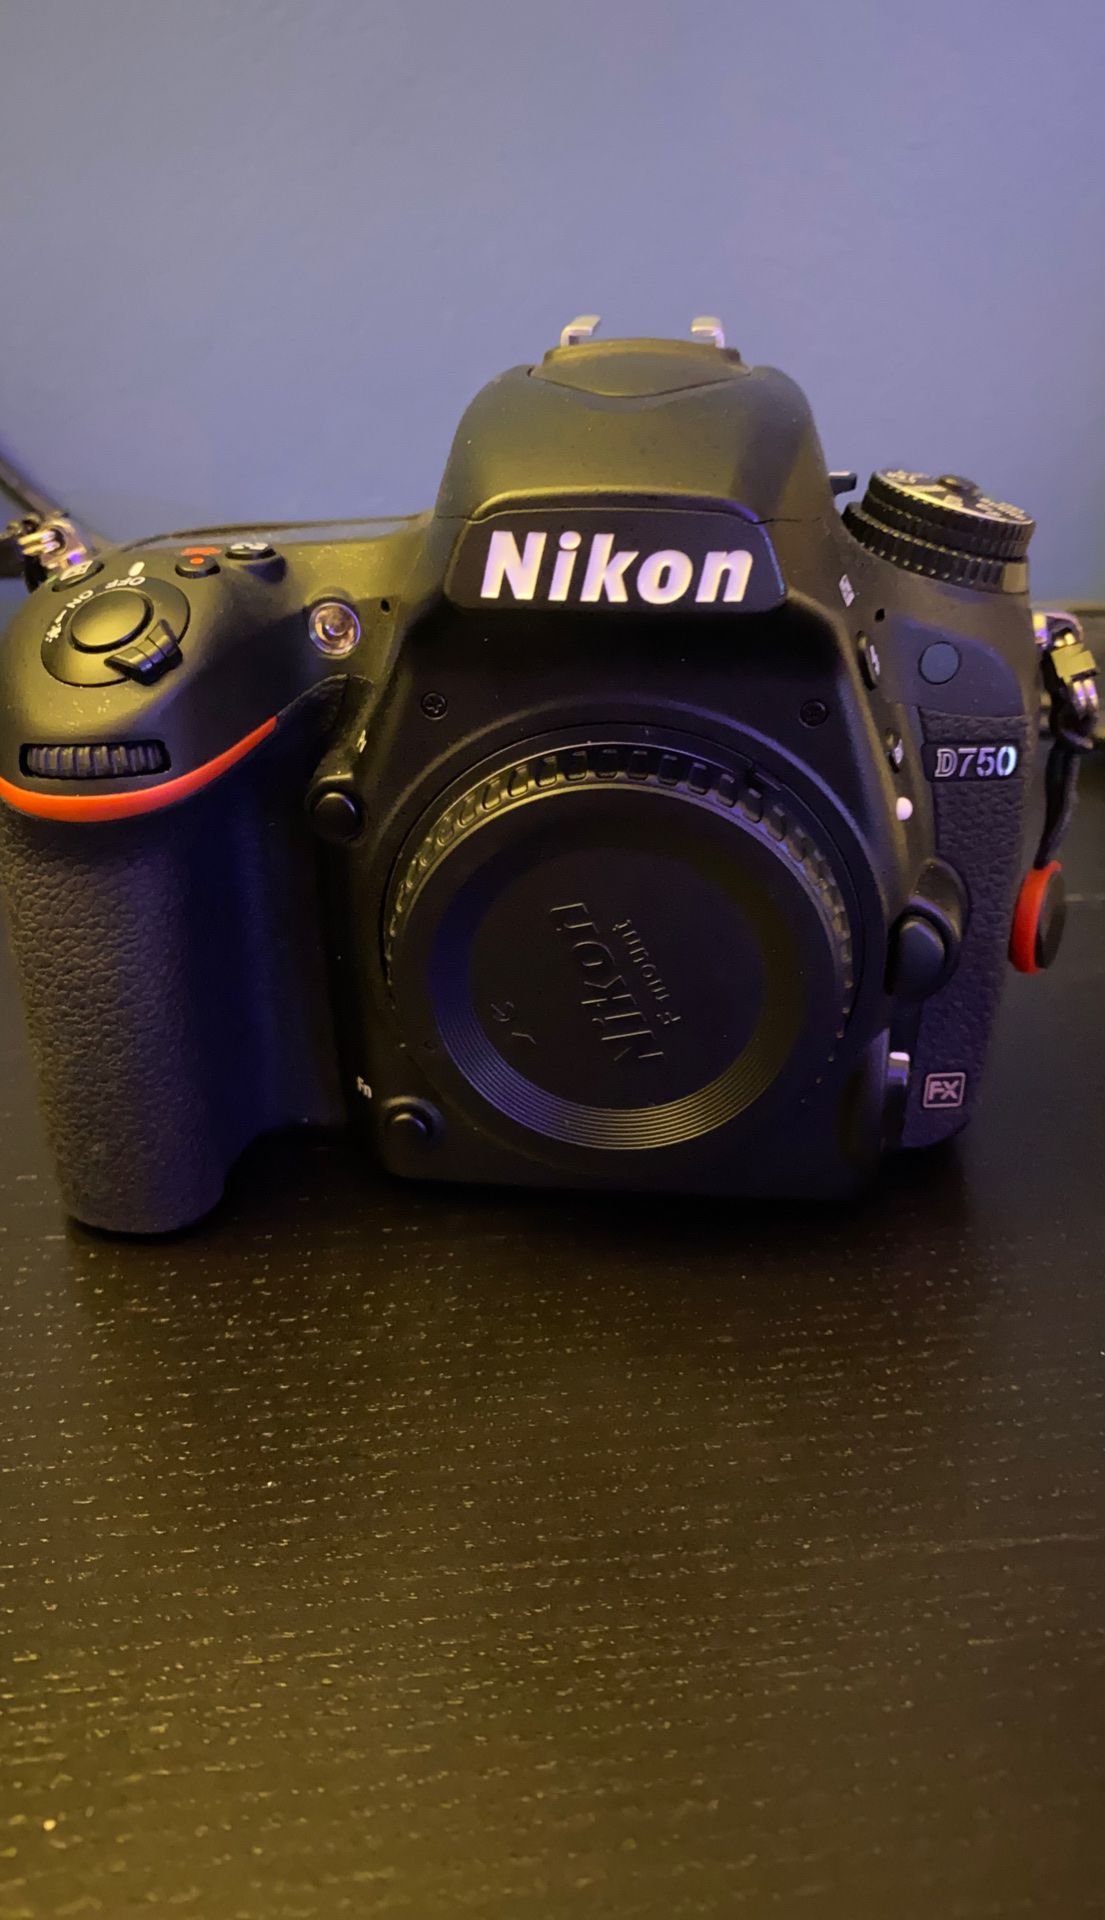 Nikon D750. Less than 8500 shutter actuations